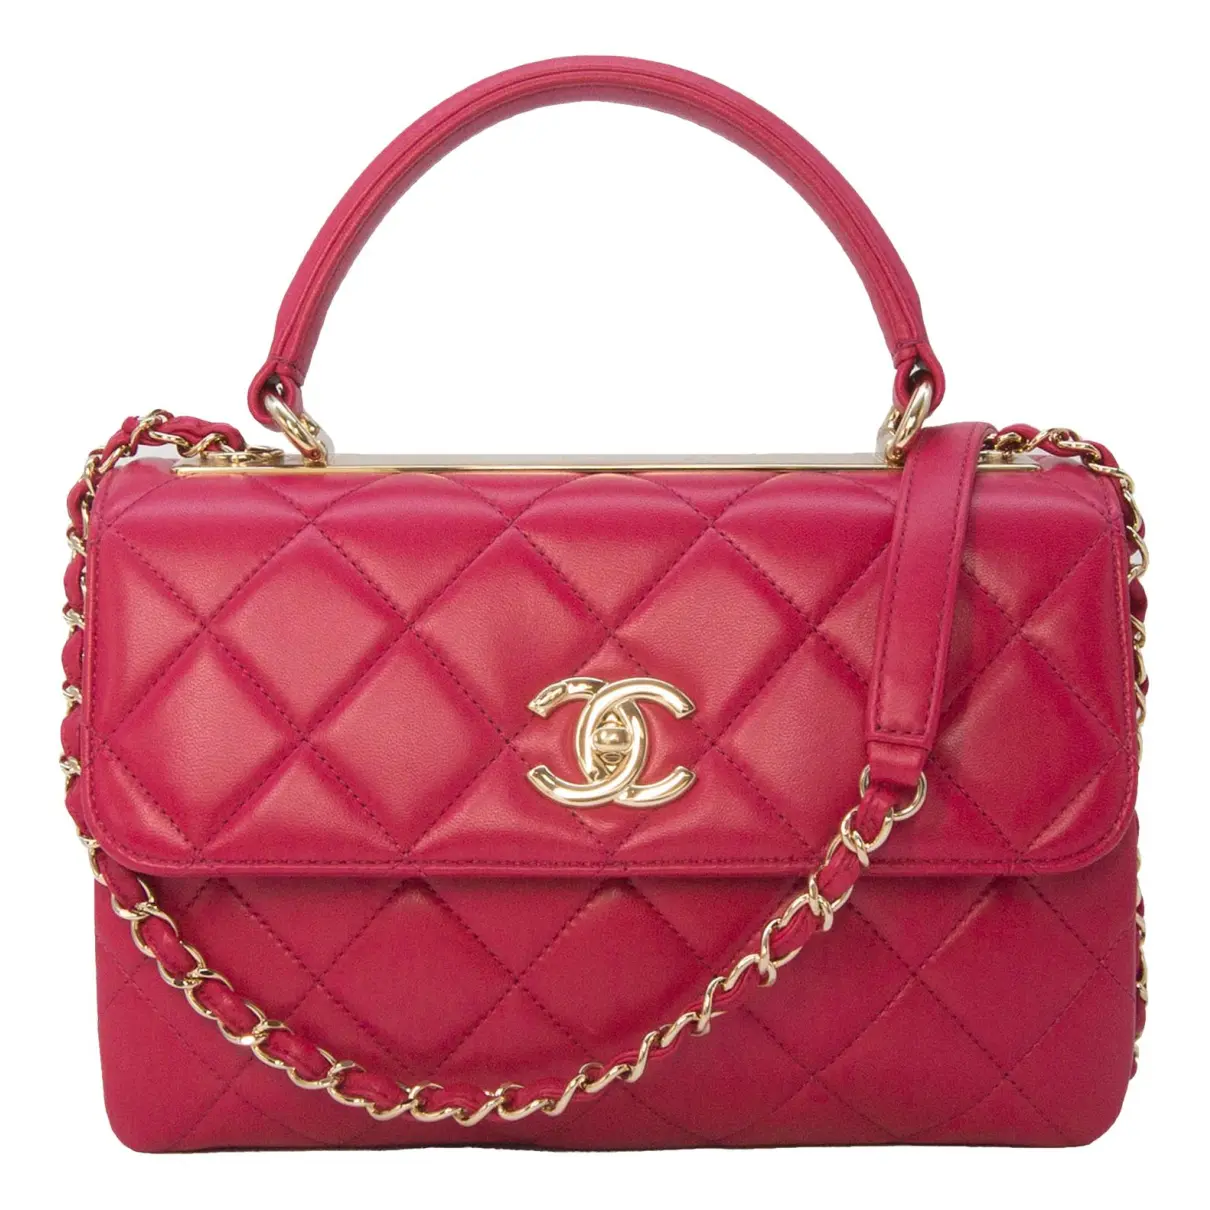 Trendy CC leather handbag